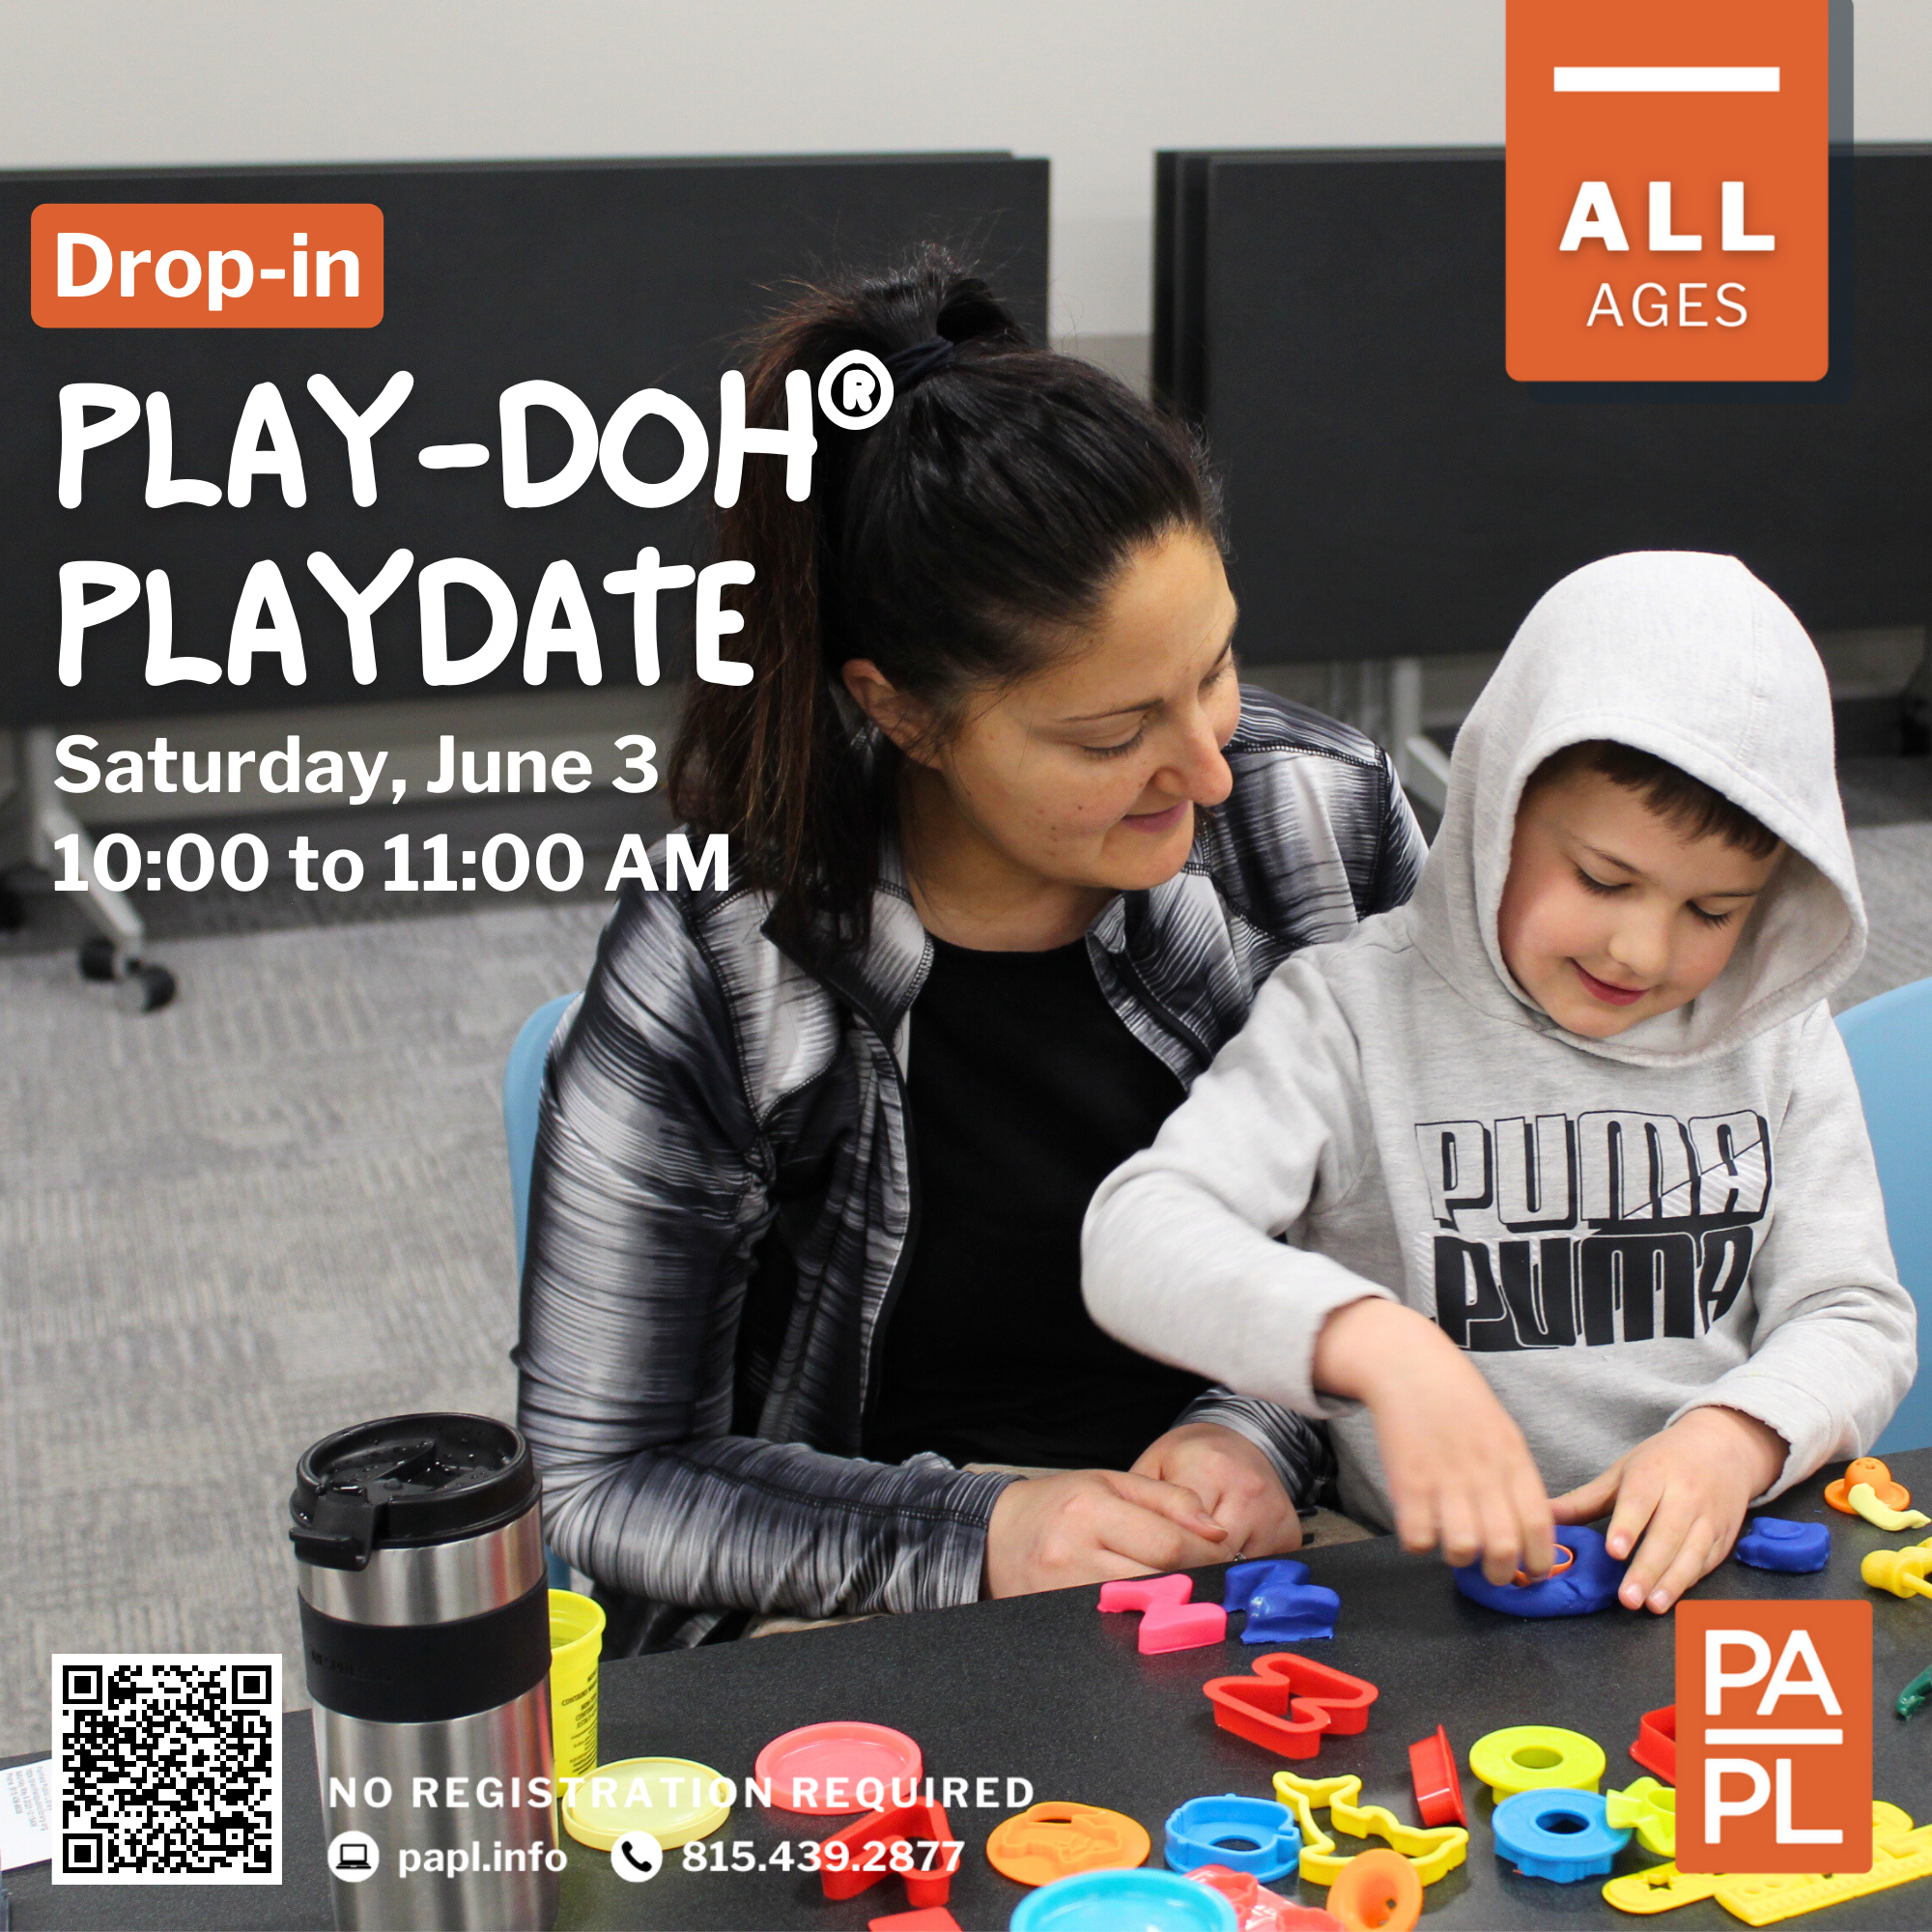 Drop-in Play-Doh® Playdate